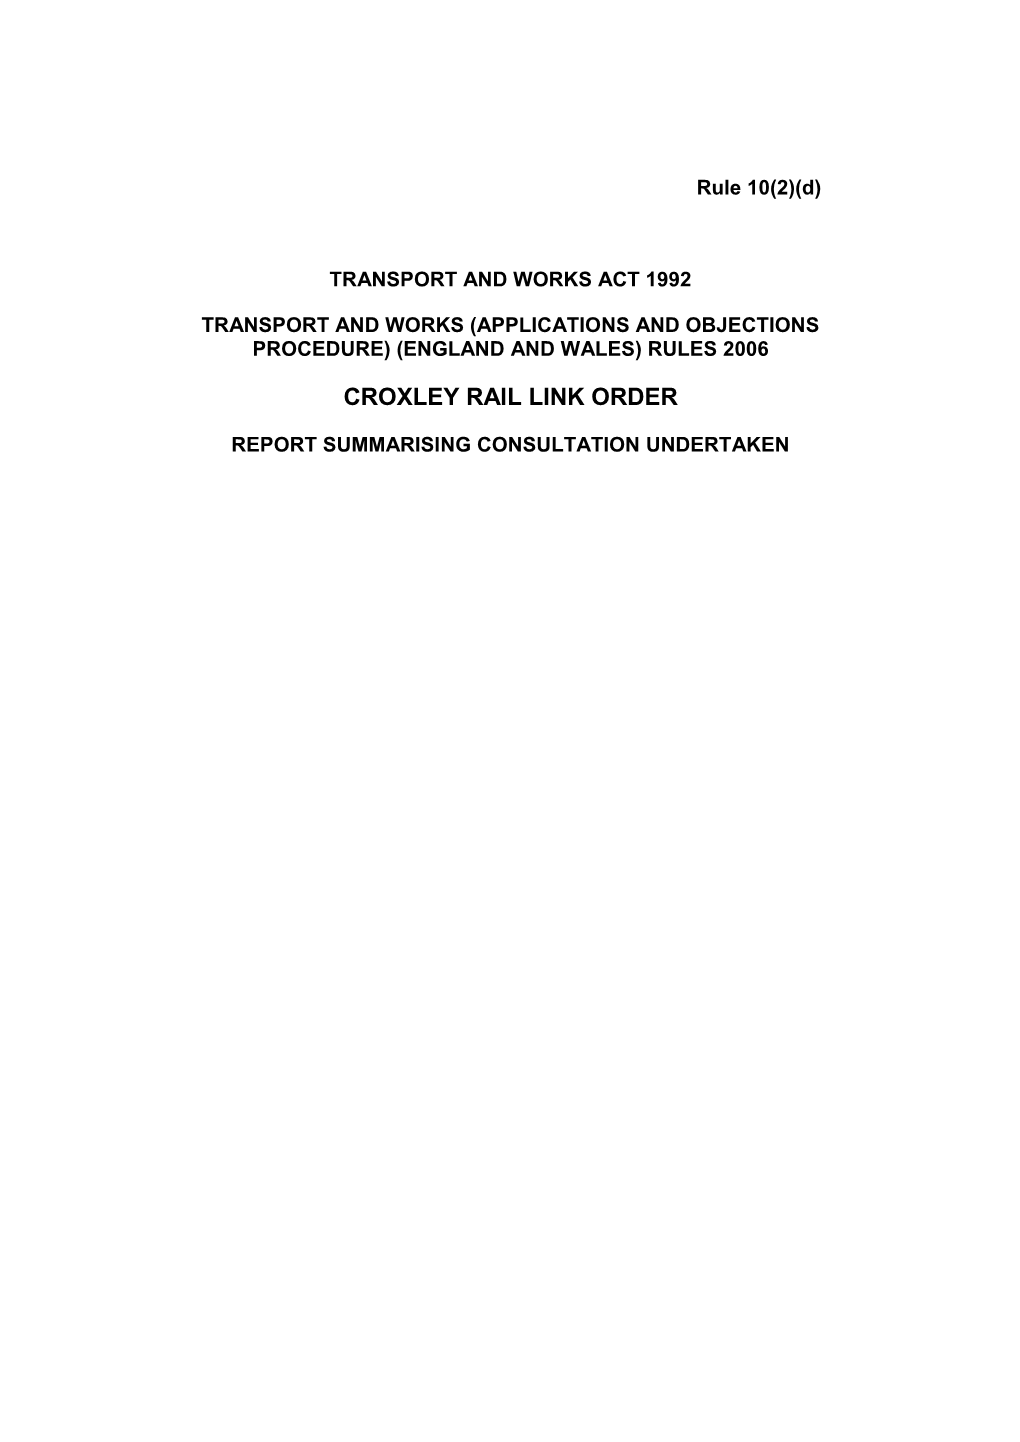 Croxley Rail Link Order